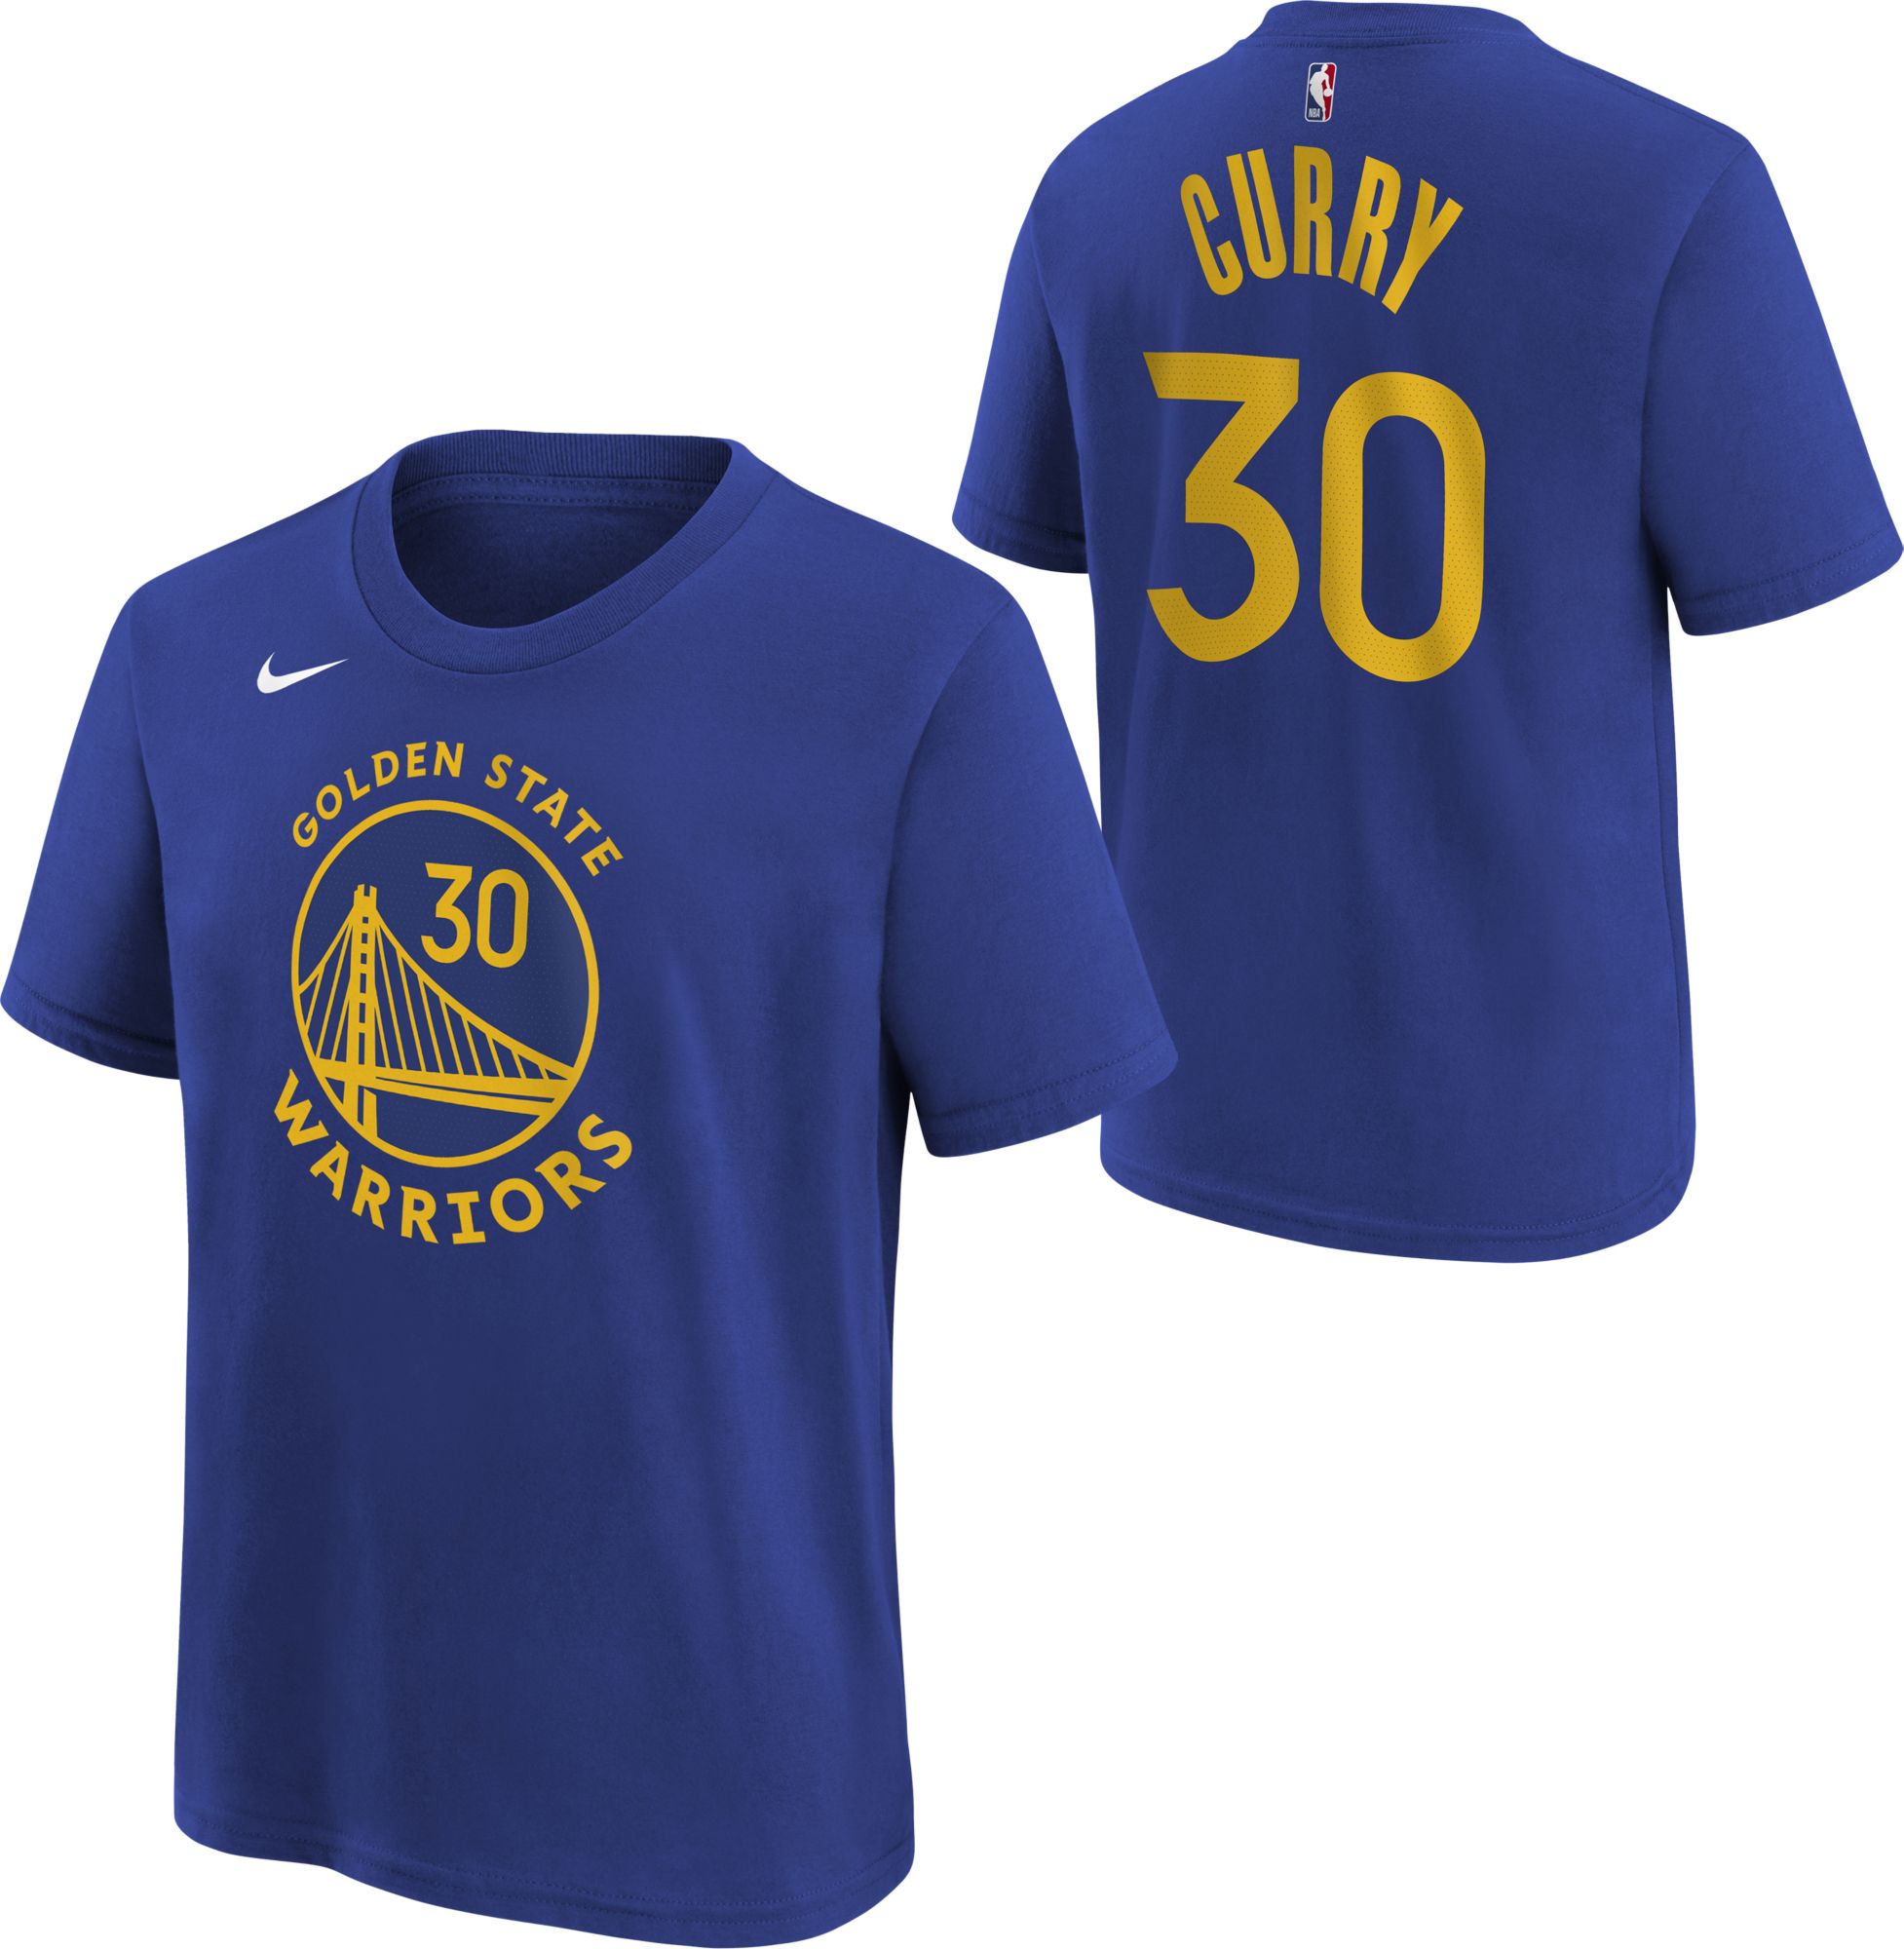 Nike Mens Golden State Warriors Stephen Curry #30 Blue Swingman Jersey Sz M  gr14